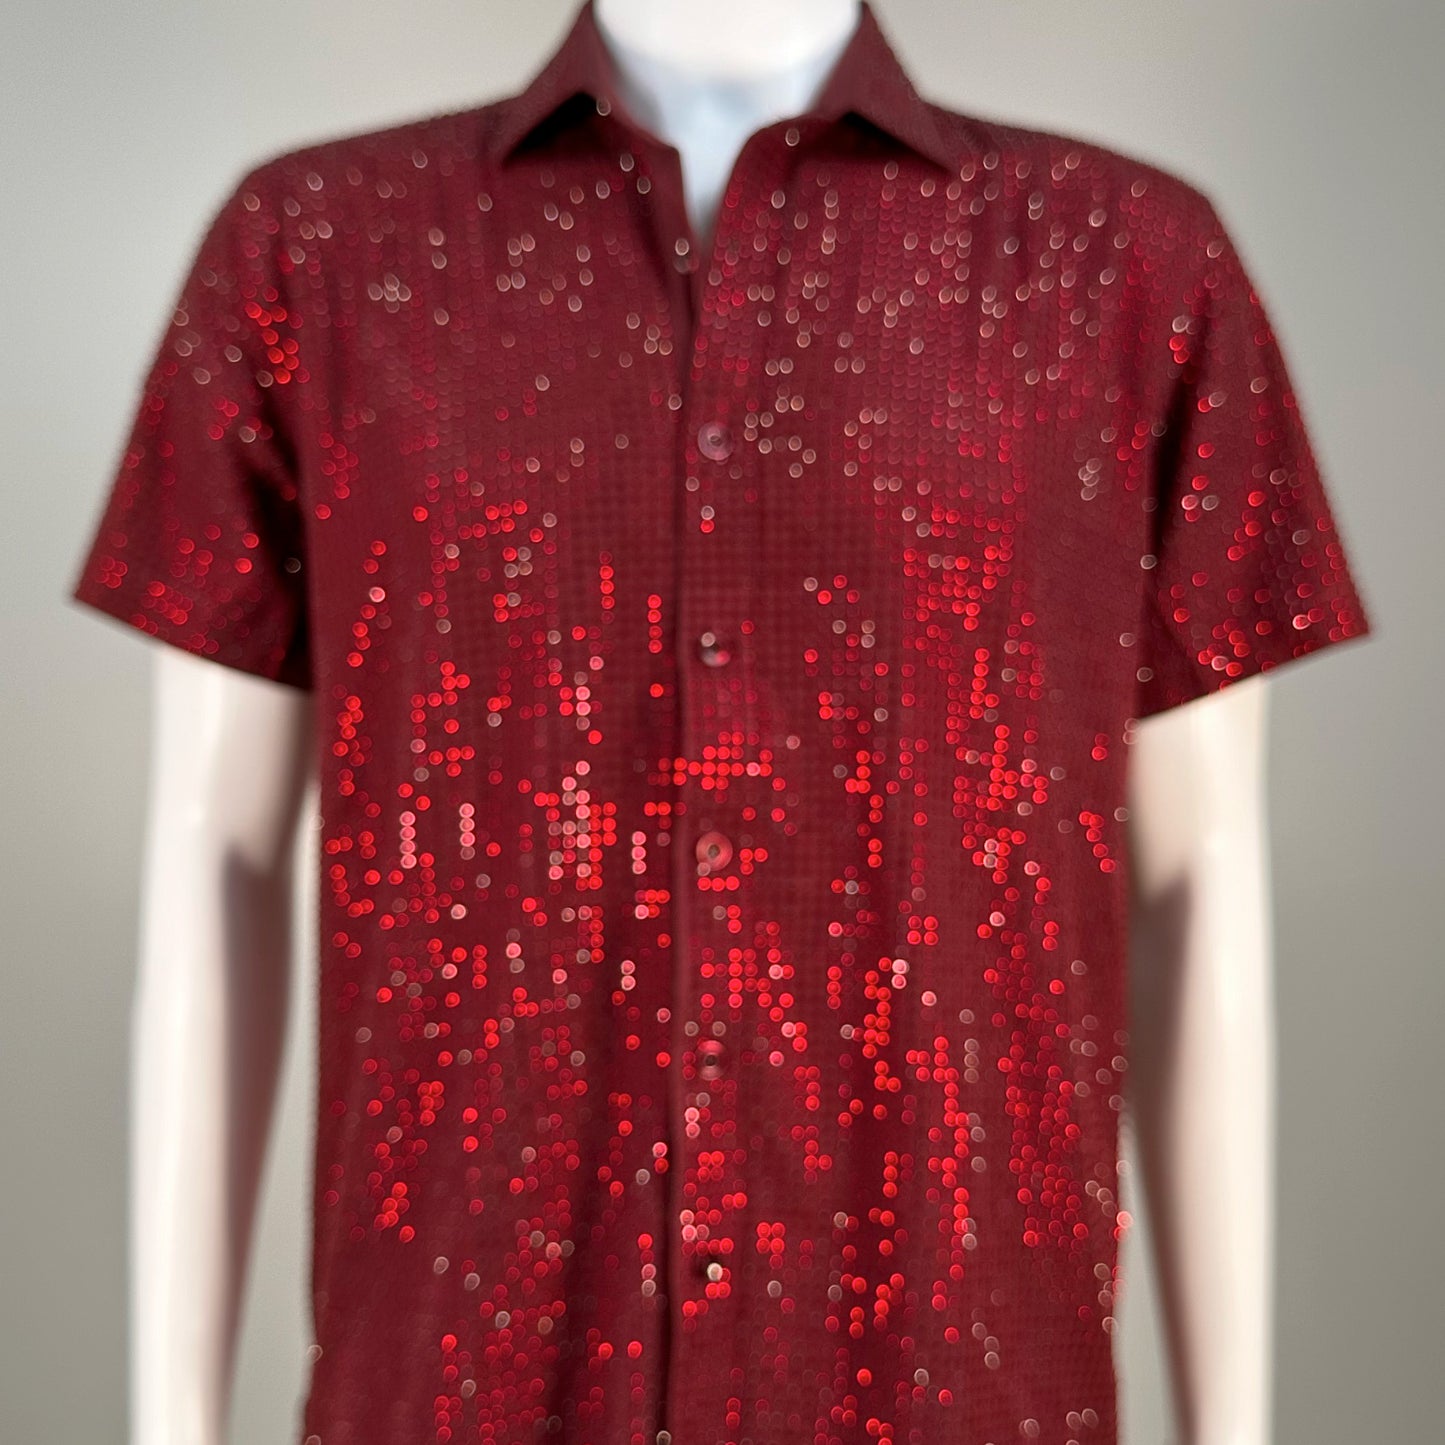 Red Siam Crystal Rhinestone Short Sleeve Dress Shirt on Dark Red Fabric – Handmade, Sophisticated